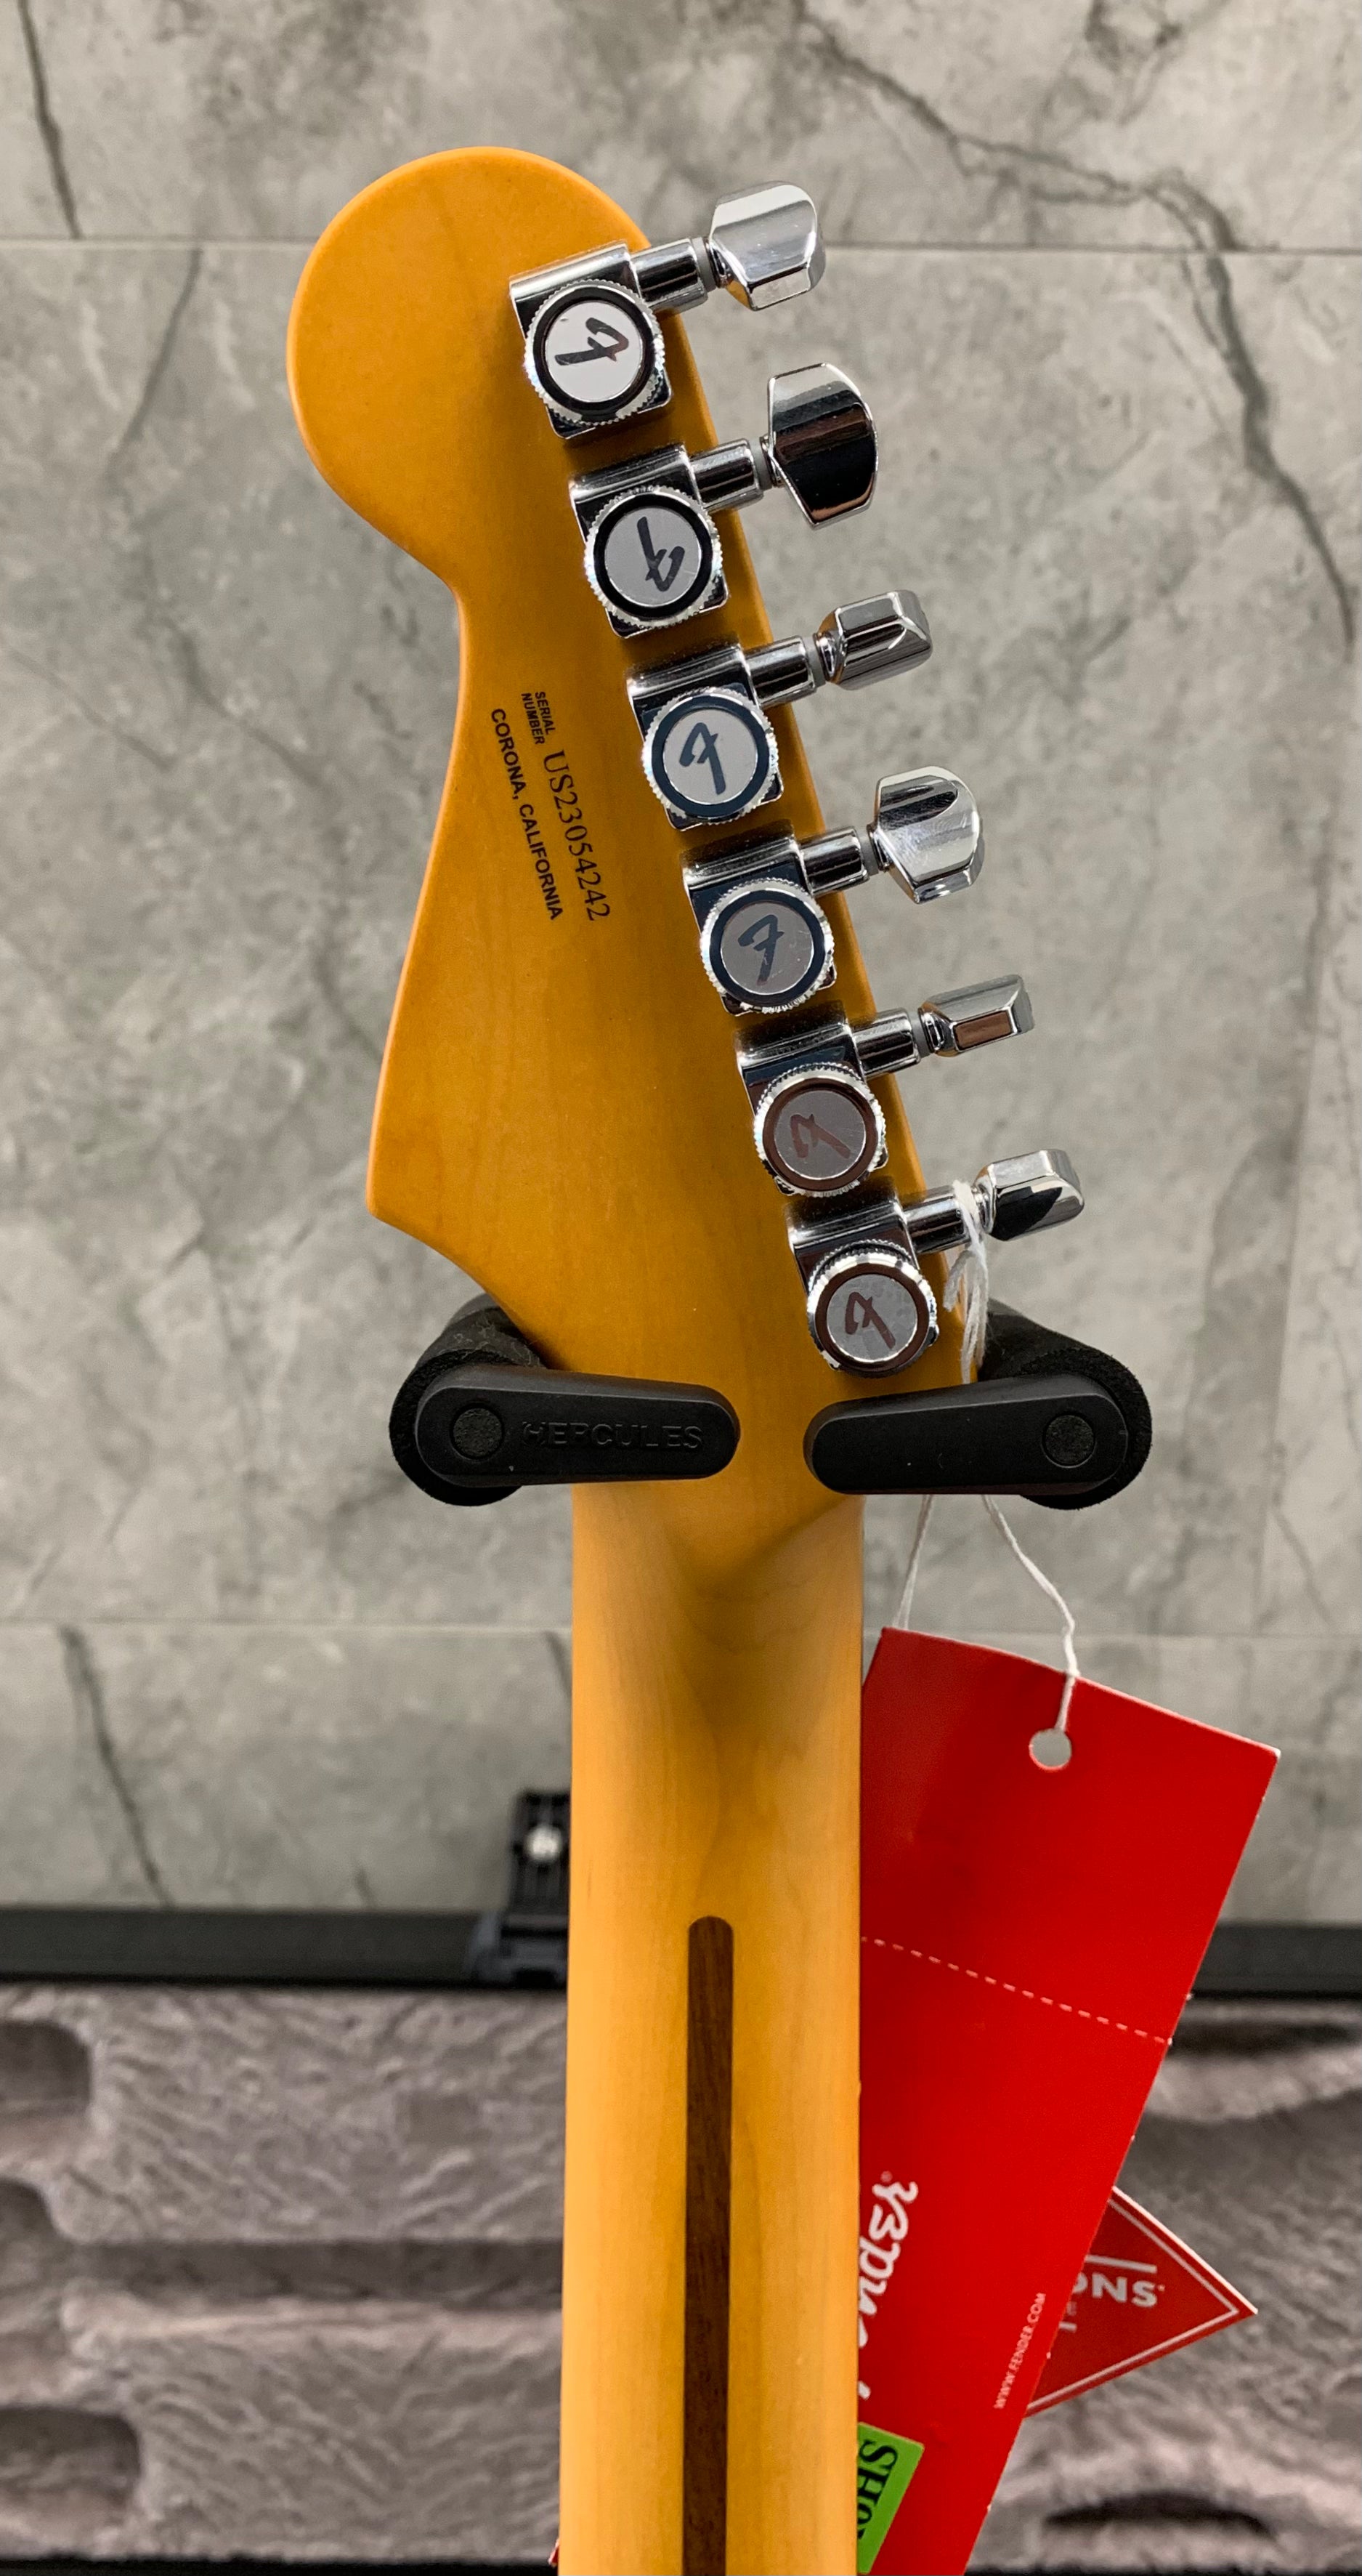 Fender American Ultra Stratocaster Rosewood Fingerboard Ultraburst 0118010712 SERIAL NUMBER US23054242 - 7.8 LBS